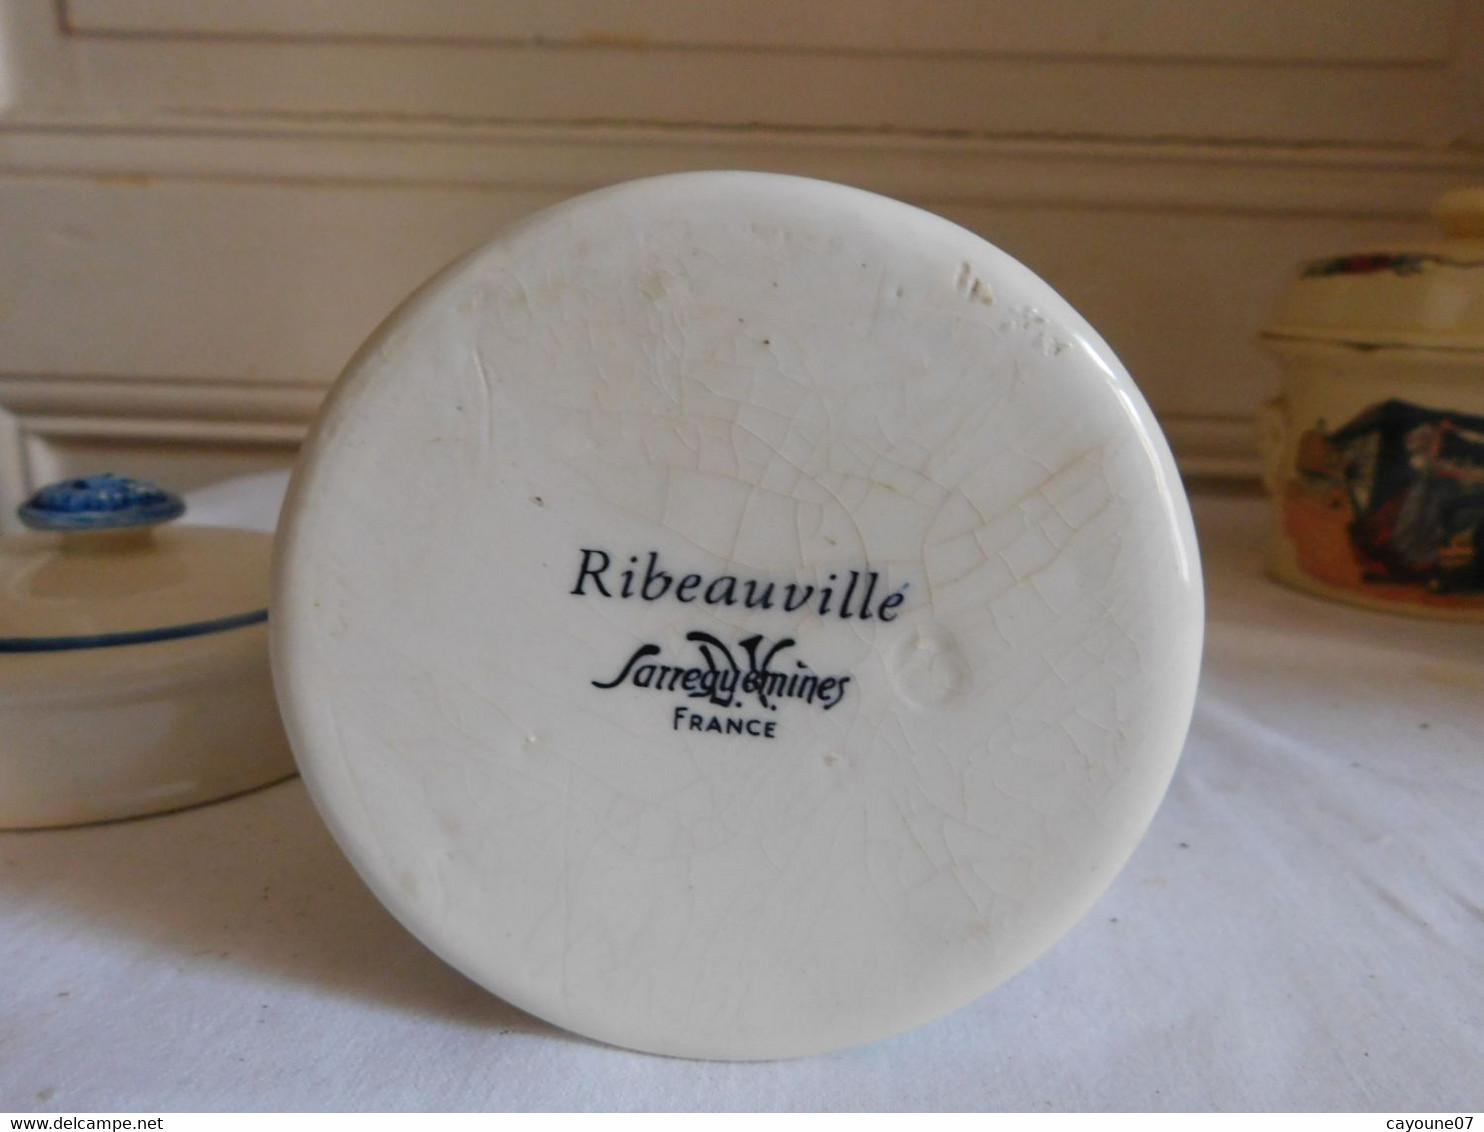 Sarreguemines Digoin pot à foie gras faïence modèle Ribeauvillé alsace 1920/1950